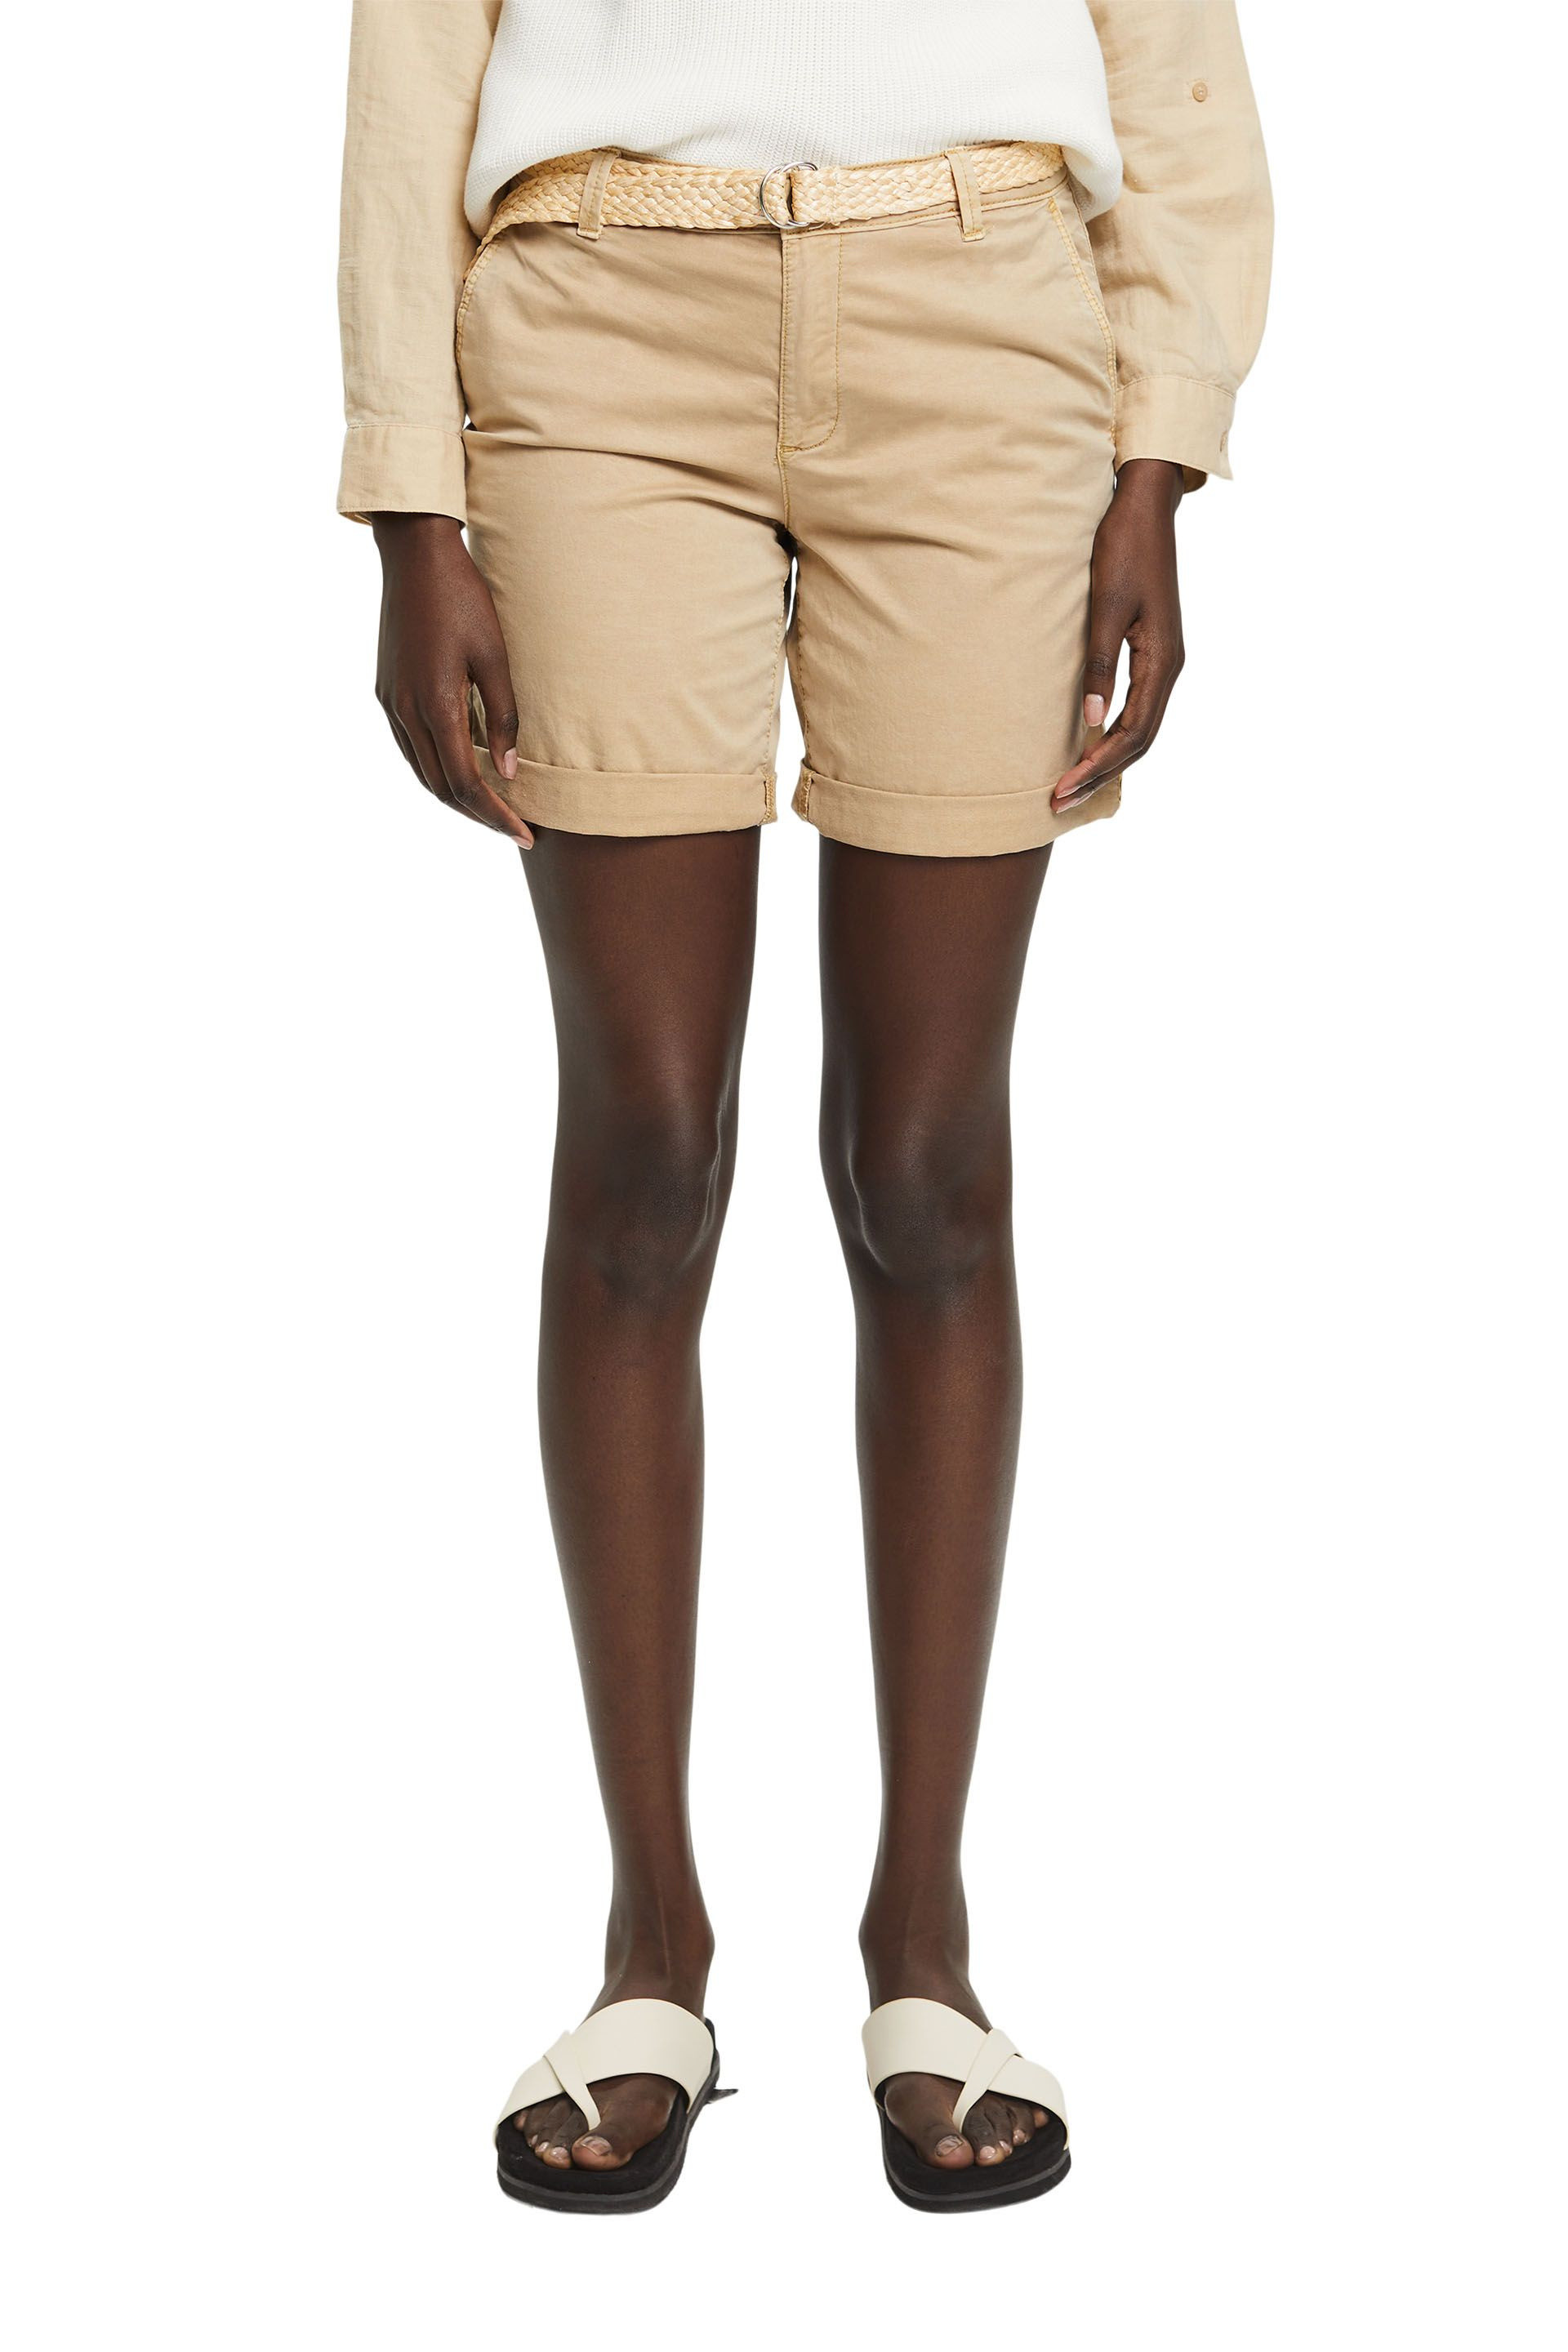 Esprit - Shorts con cintura intrecciata in rafia, Sabbia, large image number 2